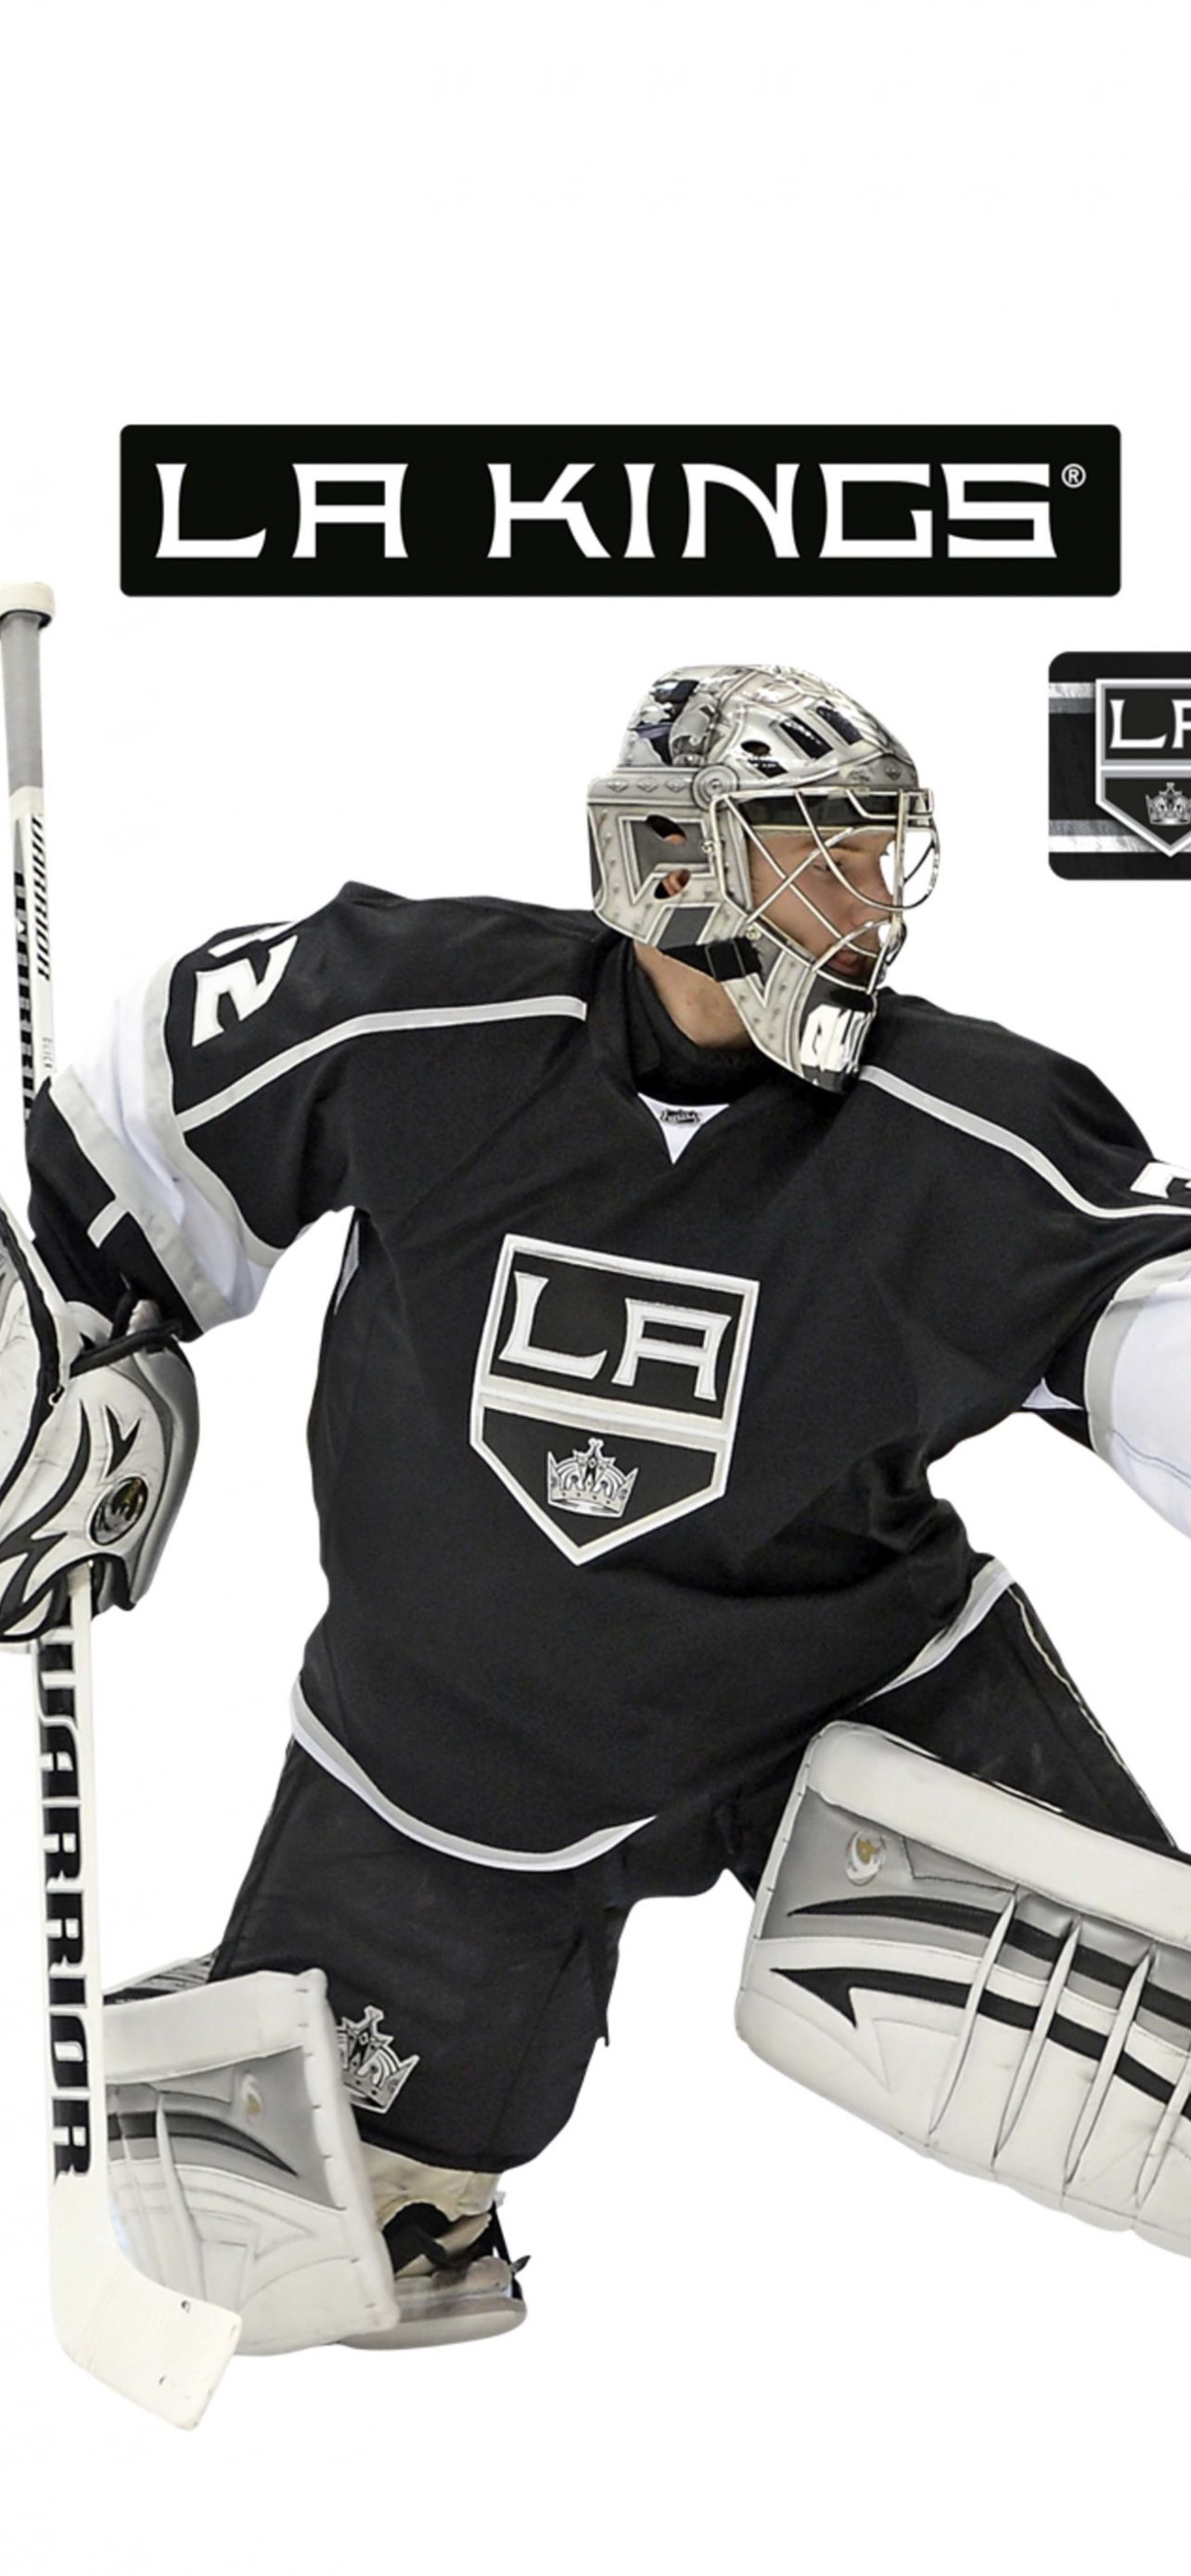 Wallpaper wallpaper sport logo NHL hockey glitter checkered Los  Angeles Kings images for desktop section спорт  download